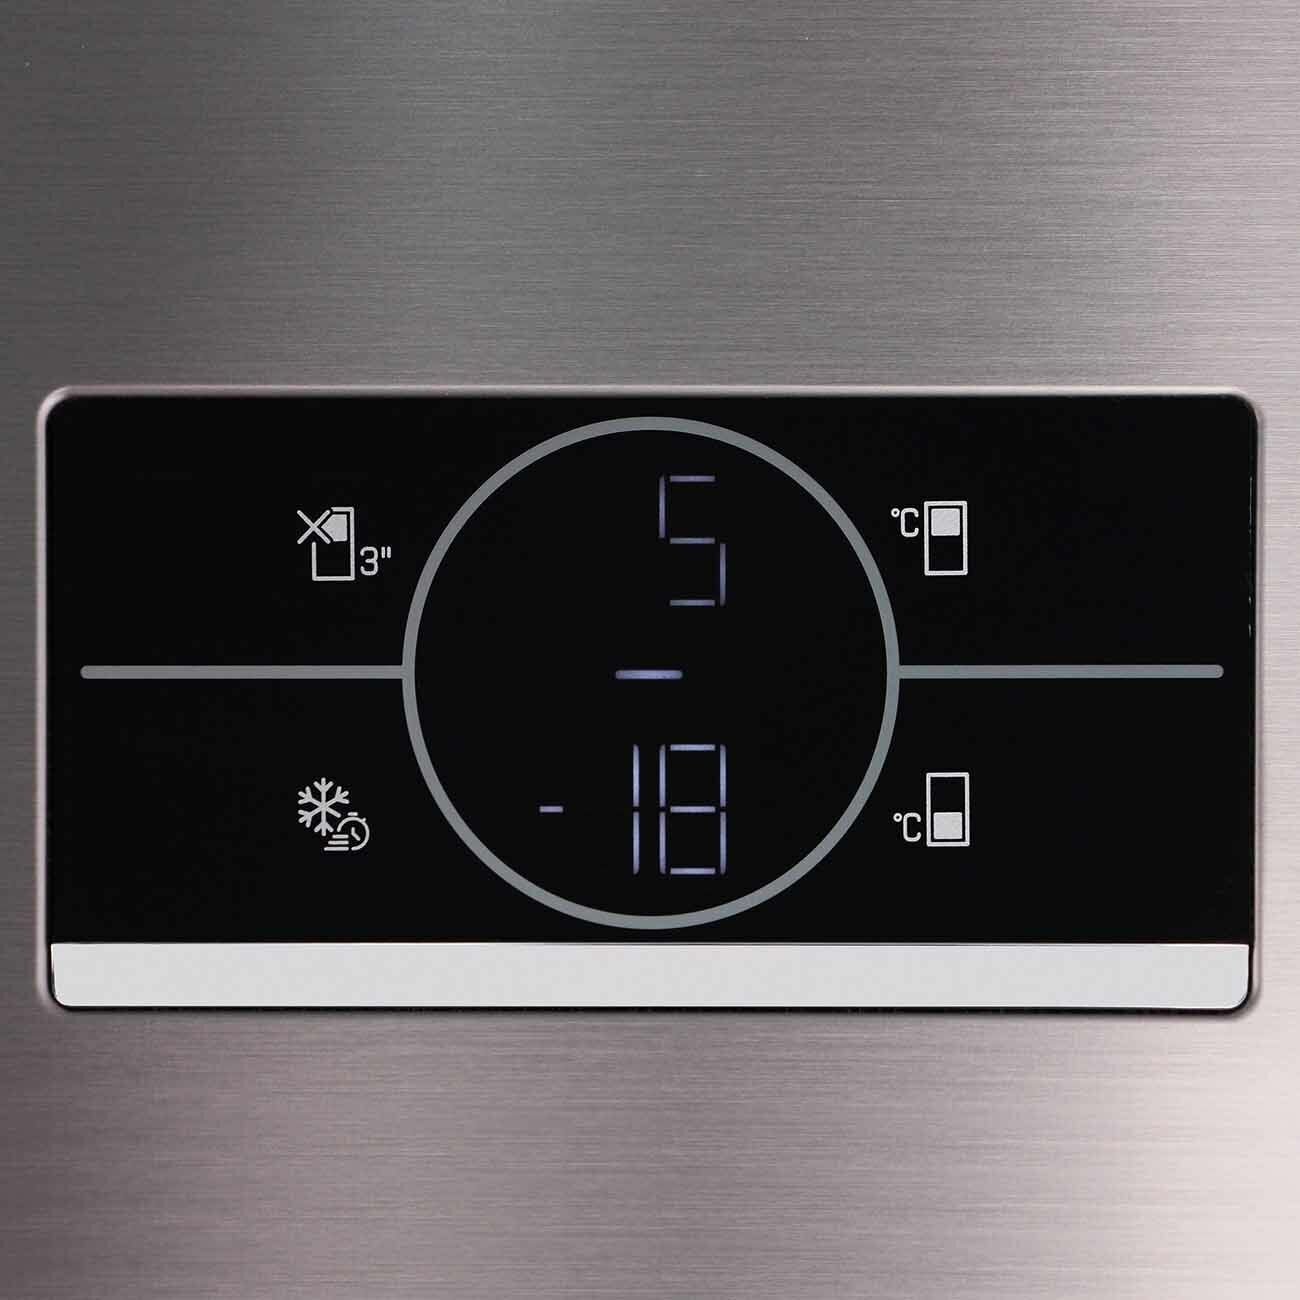 Холодильник BEKO , двухкамерный, белый - фото №9